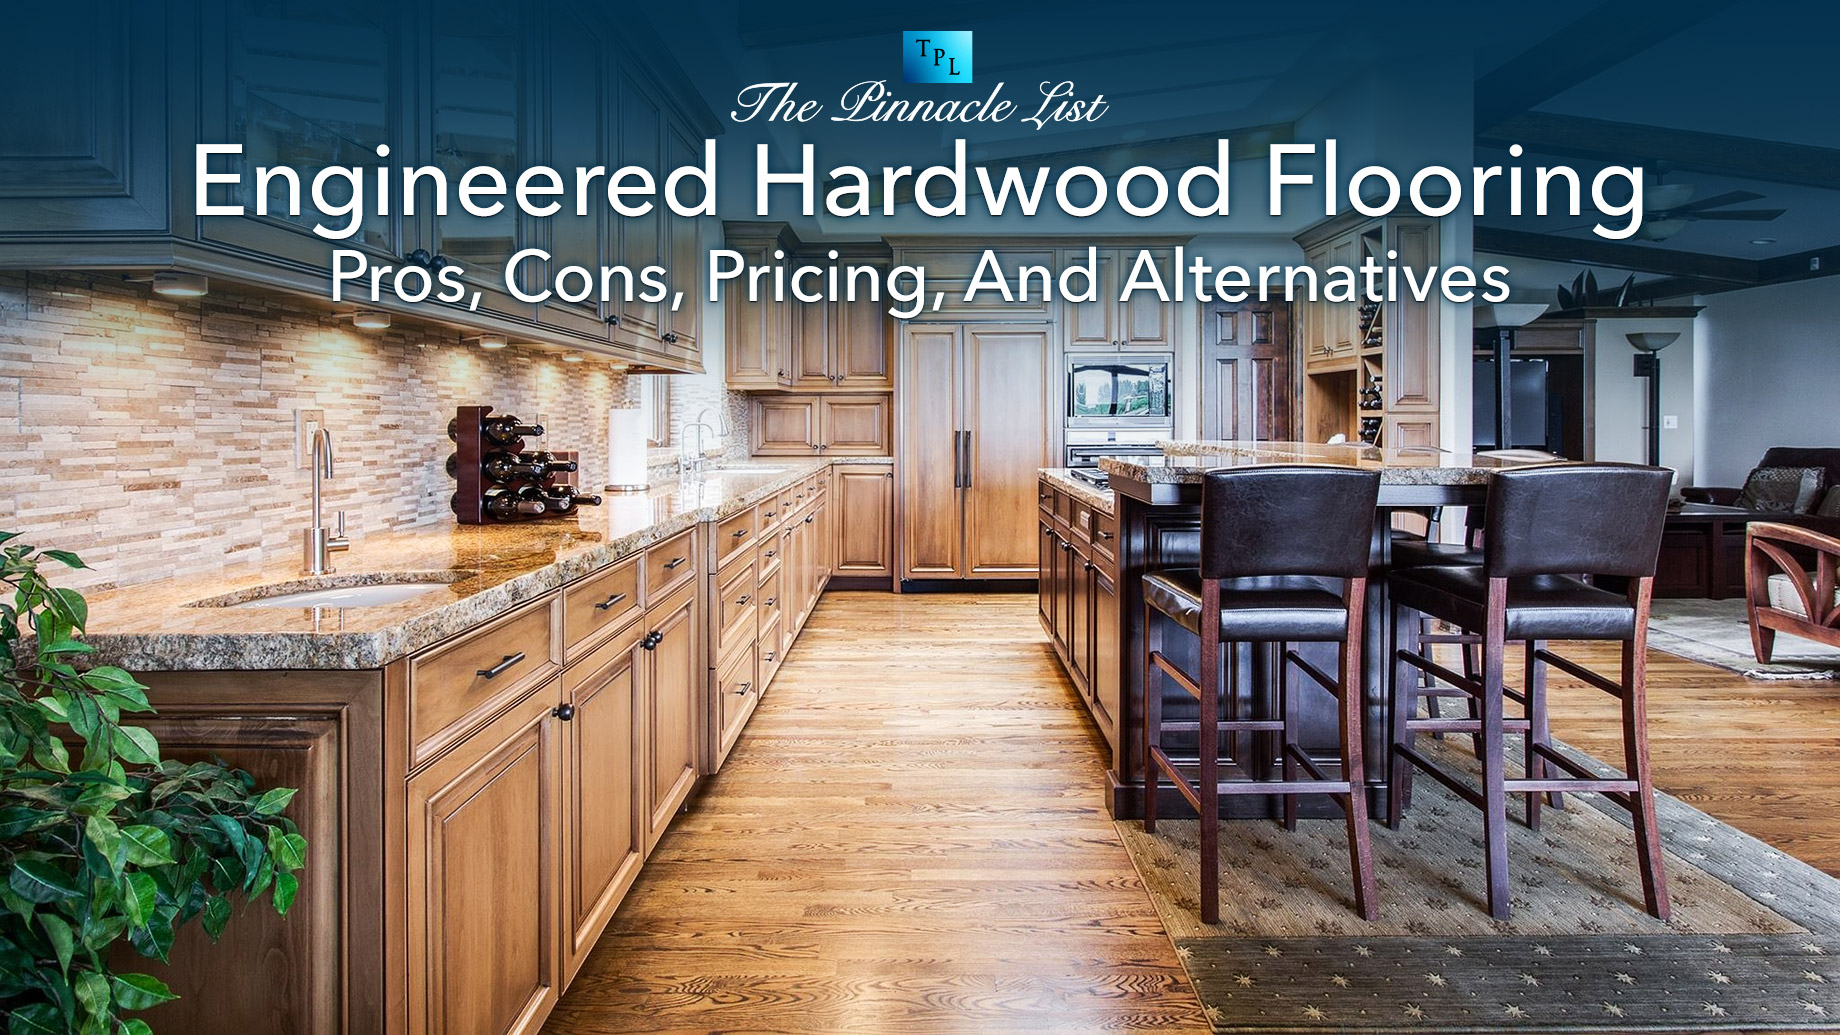 Engineered Hardwood Flooring - Pros, Cons, Pricing, And Alternatives